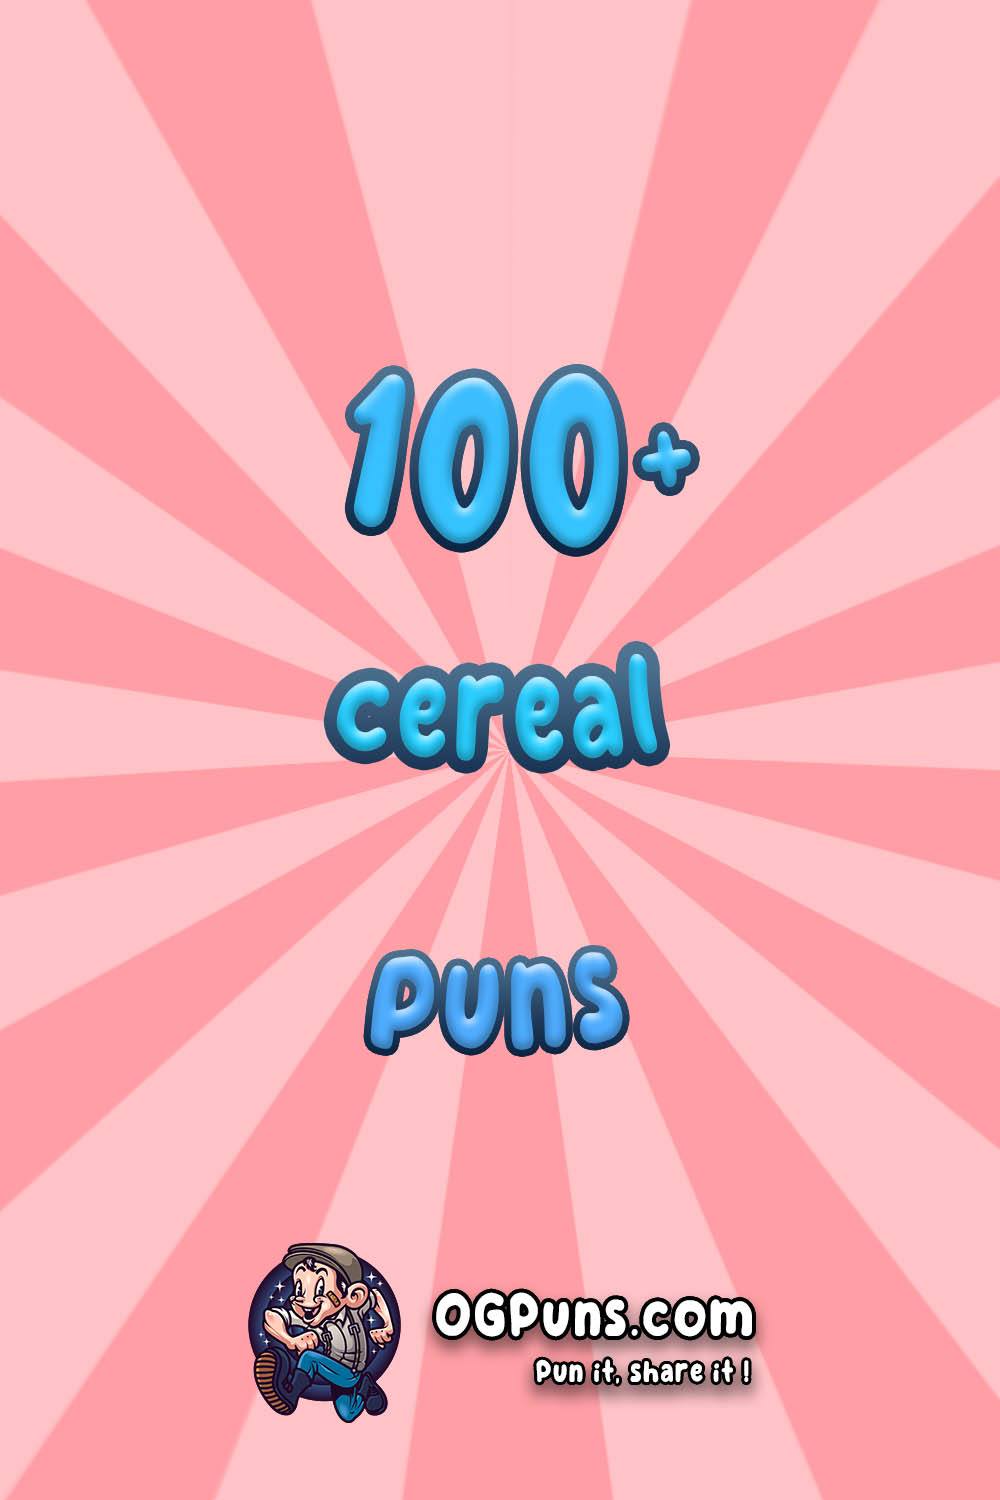 Cereal puns Image for Pinterest